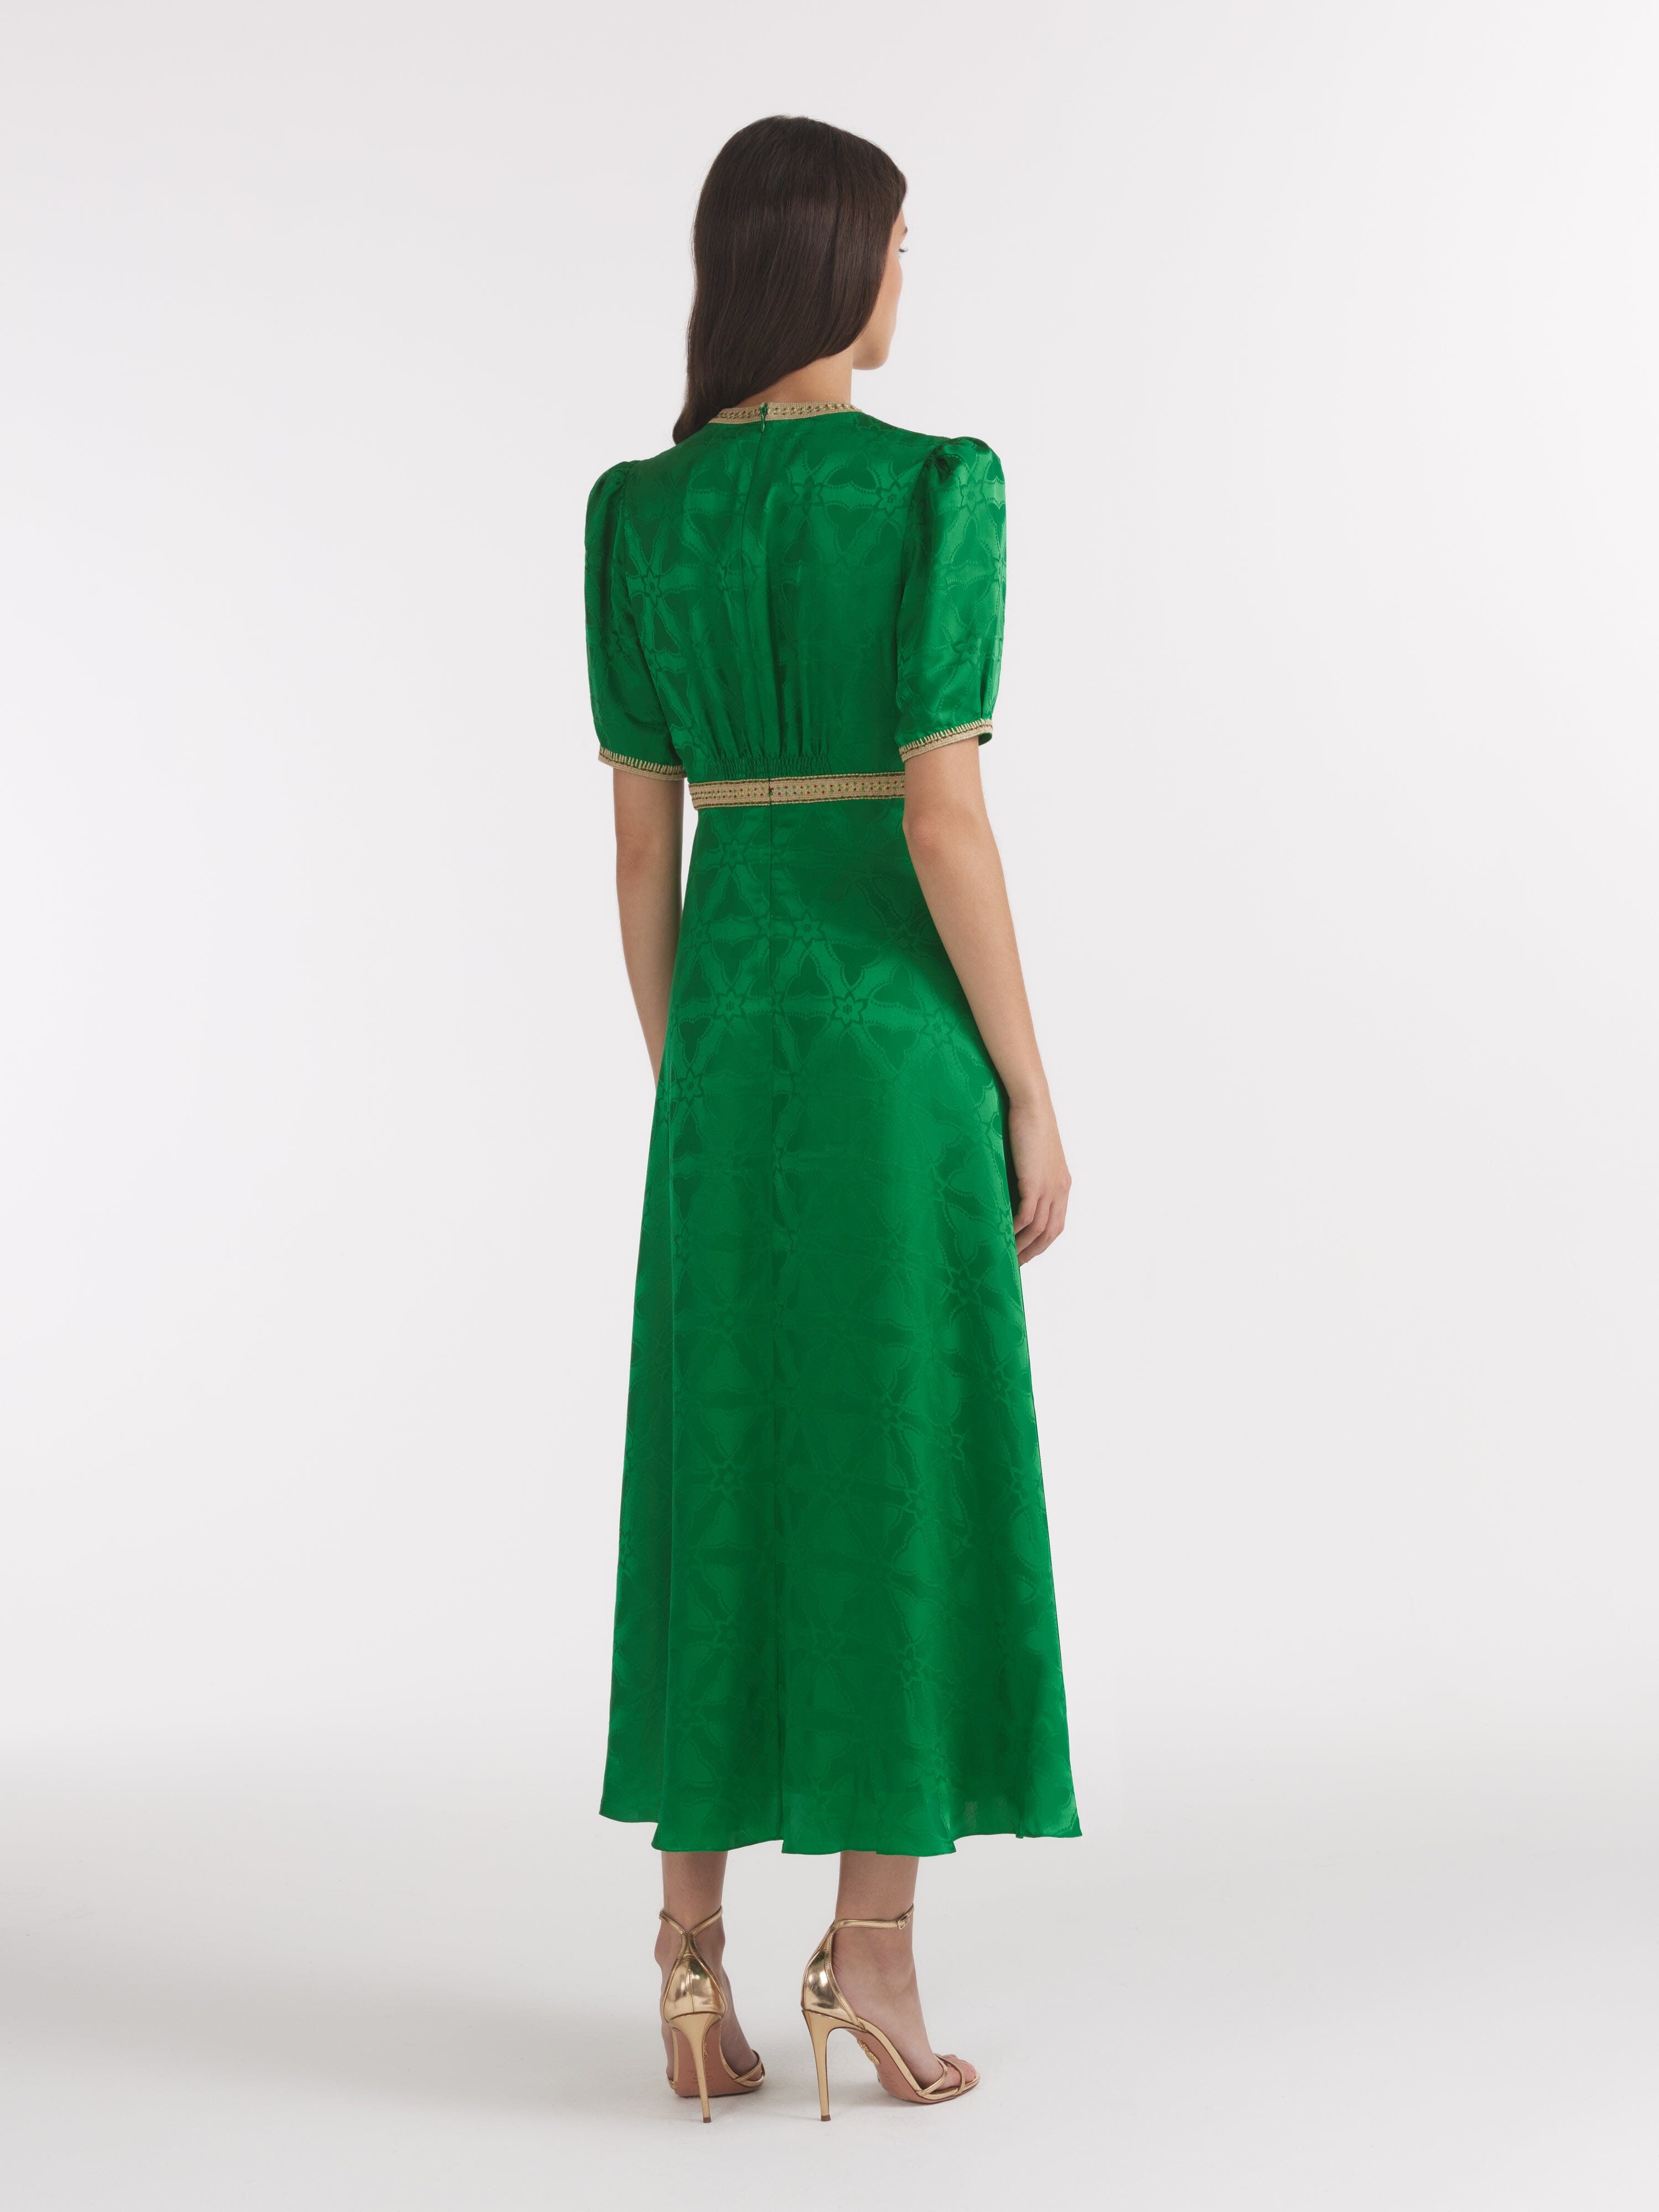 Tabitha C Dress in Emerald Green Ornate Embroidery